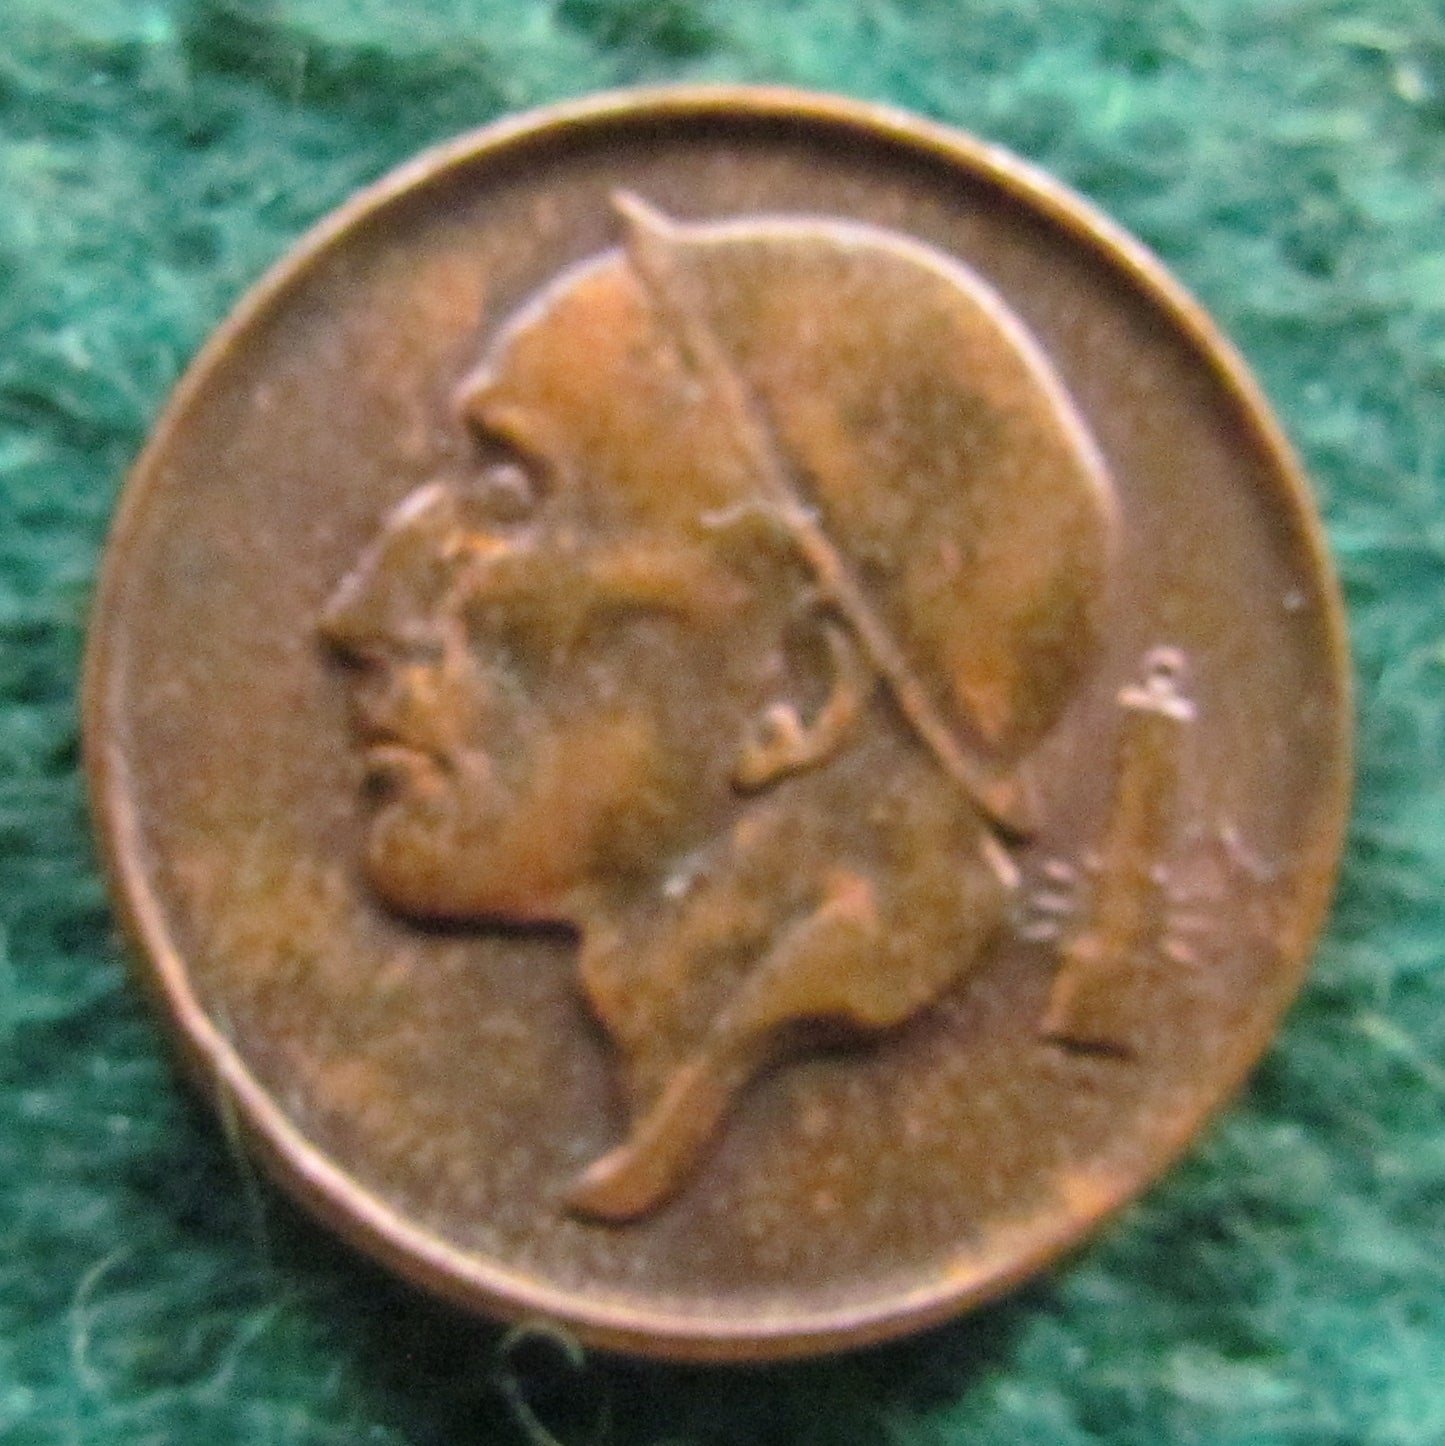 Belgium 1964 50 Centime Coin - Circulated